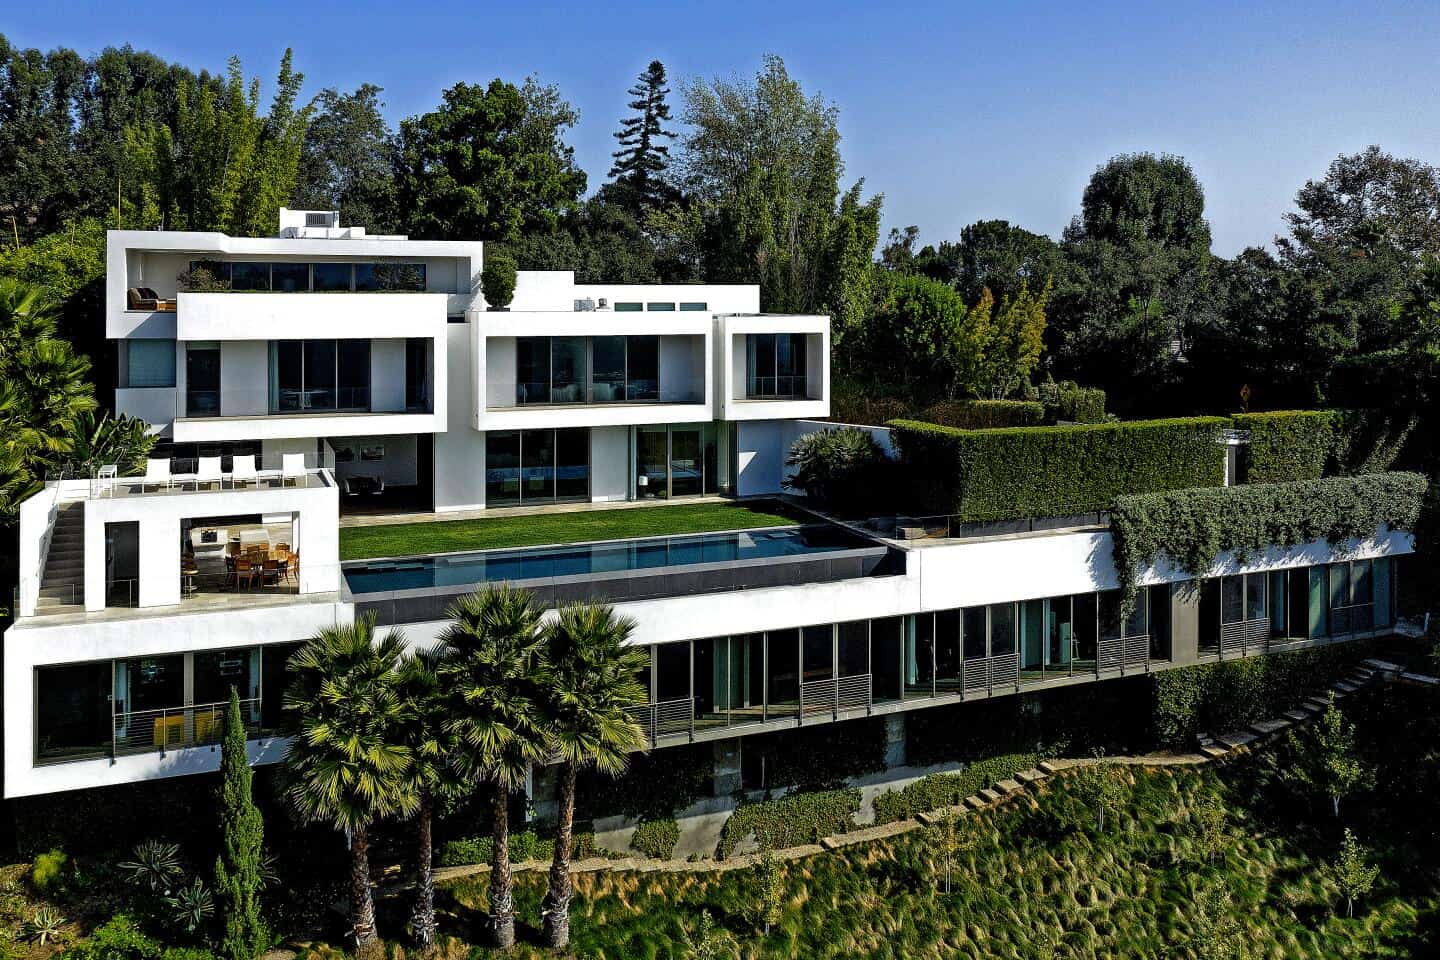 Trevor Noah owns multiple real estate properties